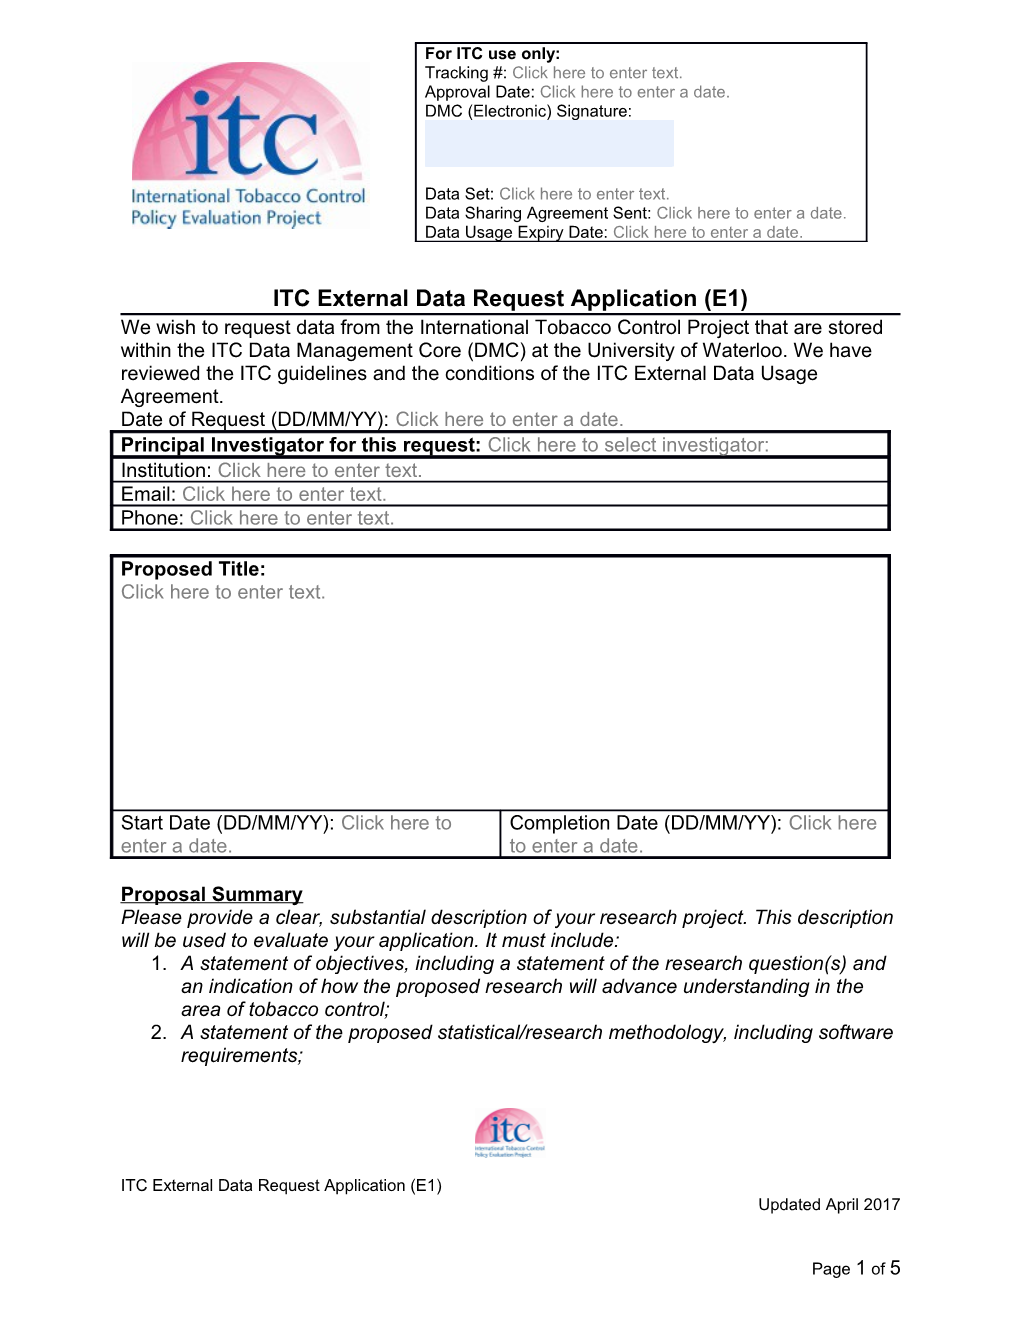 ITC External Data Request Application (E1)